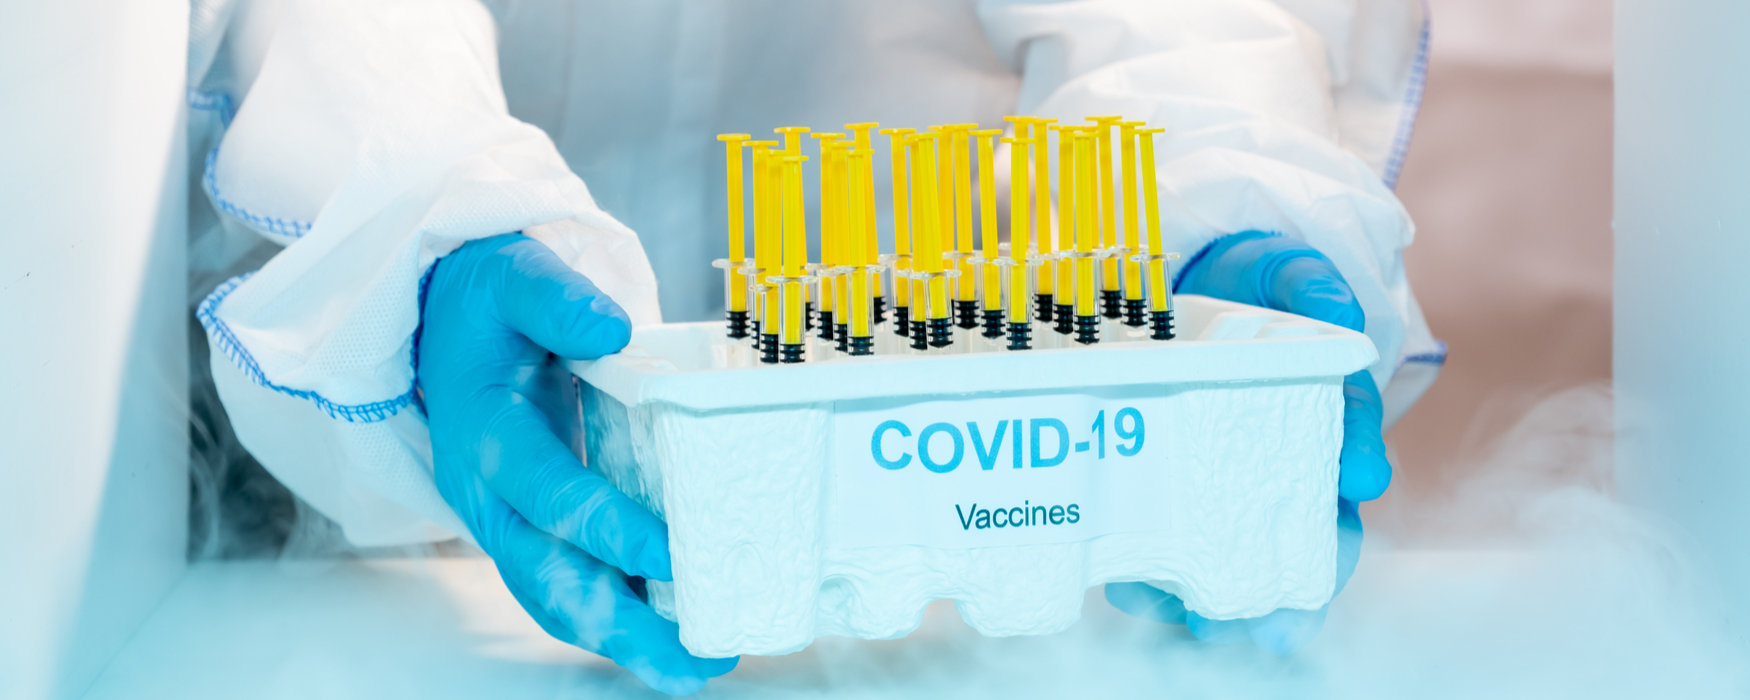 Maine covid vaccine freezers - covid 19 vaccine freezer - vaccine storage in Maine